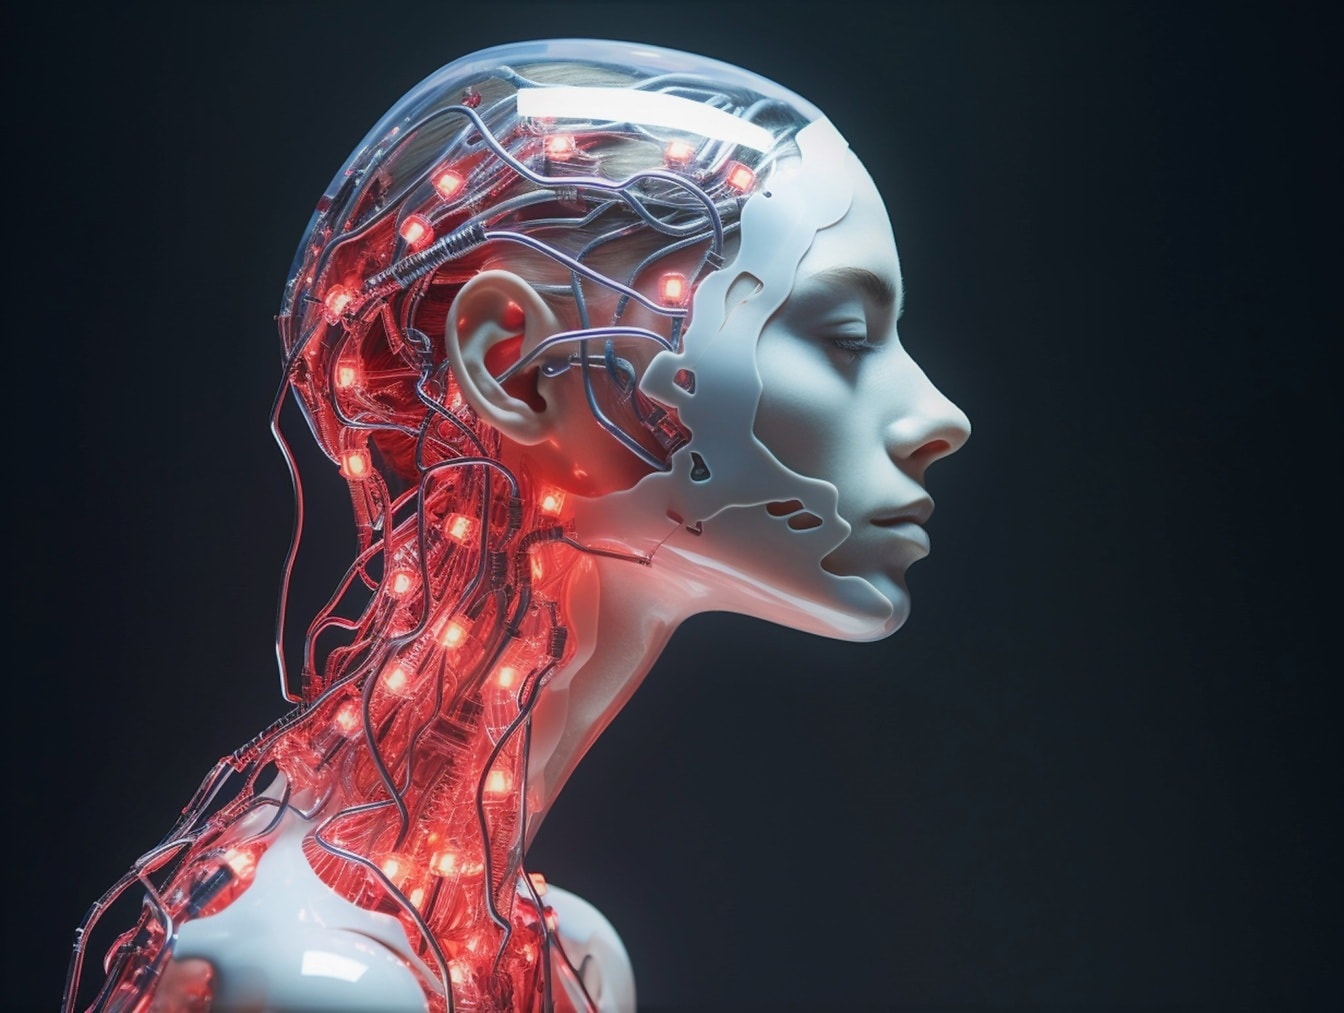 Žena humanoidný kyborg robot s umelou inteligenciou